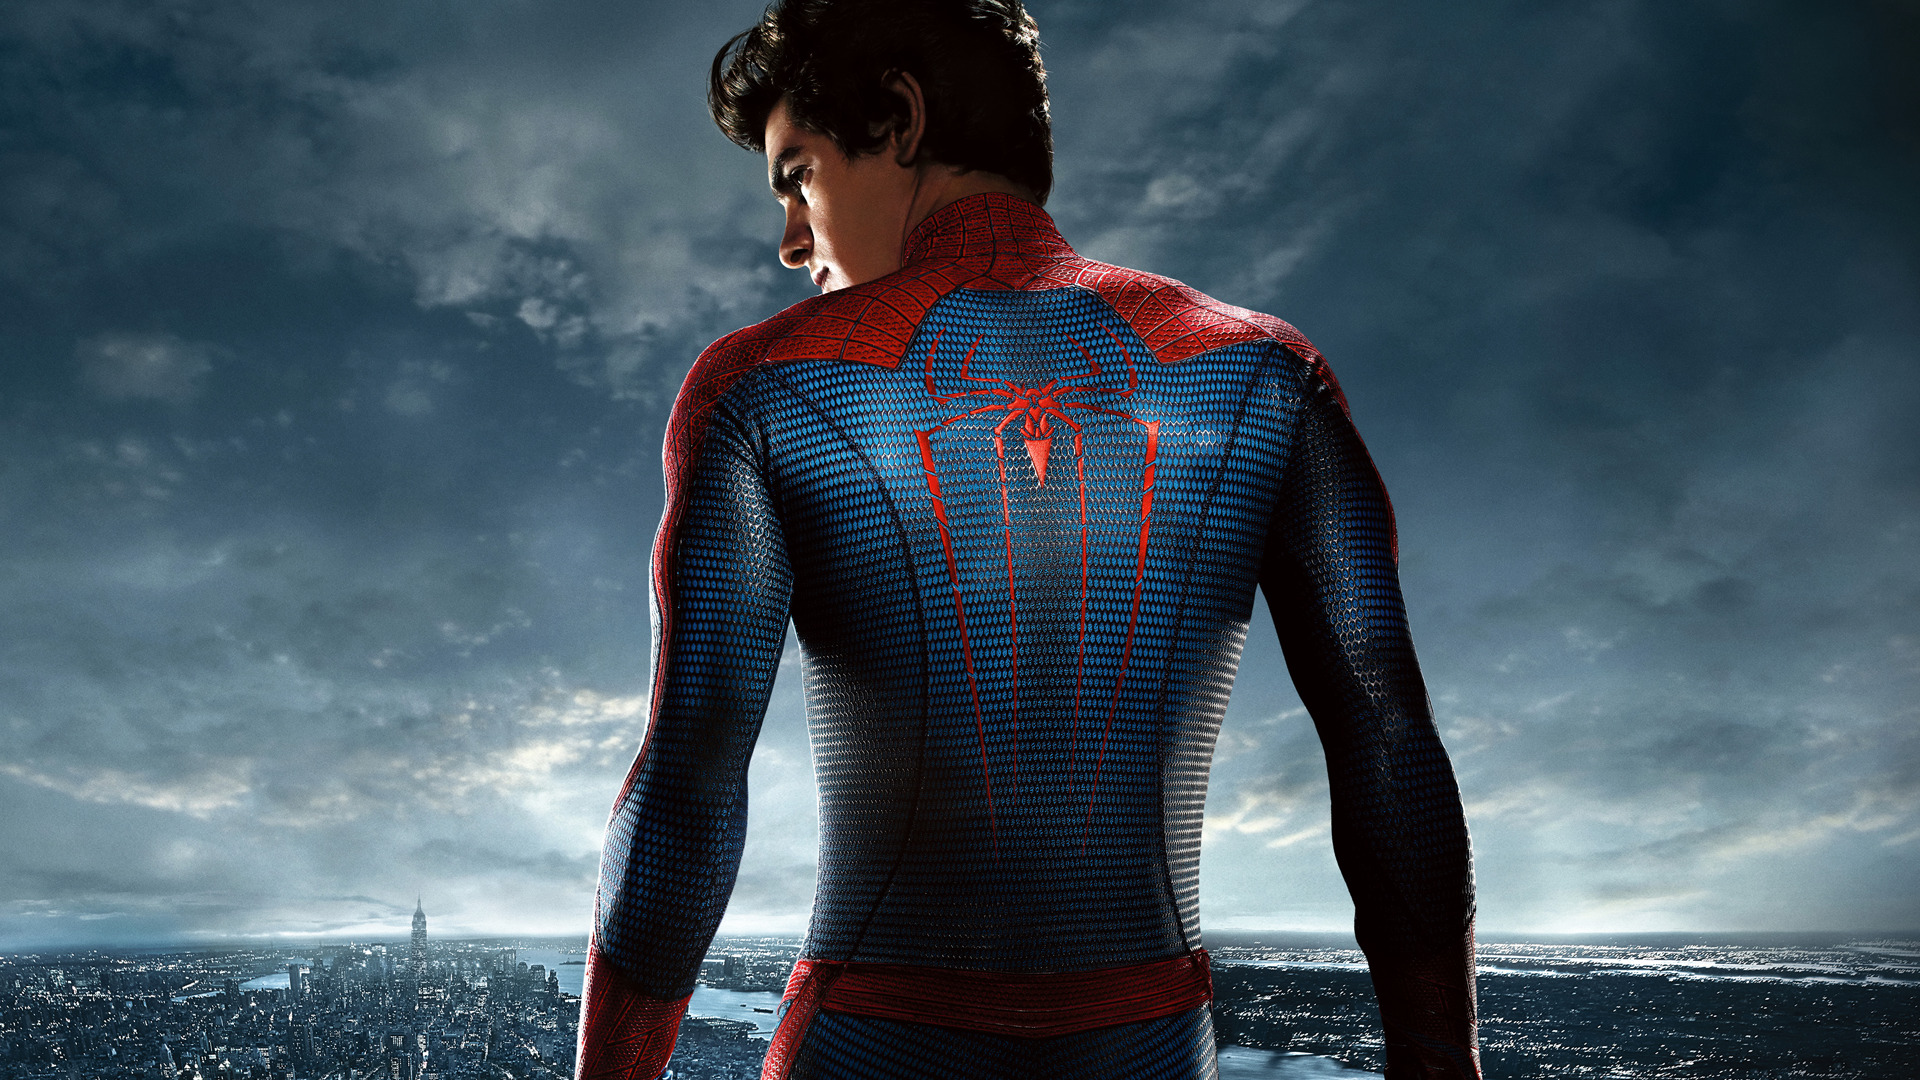 HD The Amazing Spiderman Movie Wallpaper HD 1080p Full Size ...